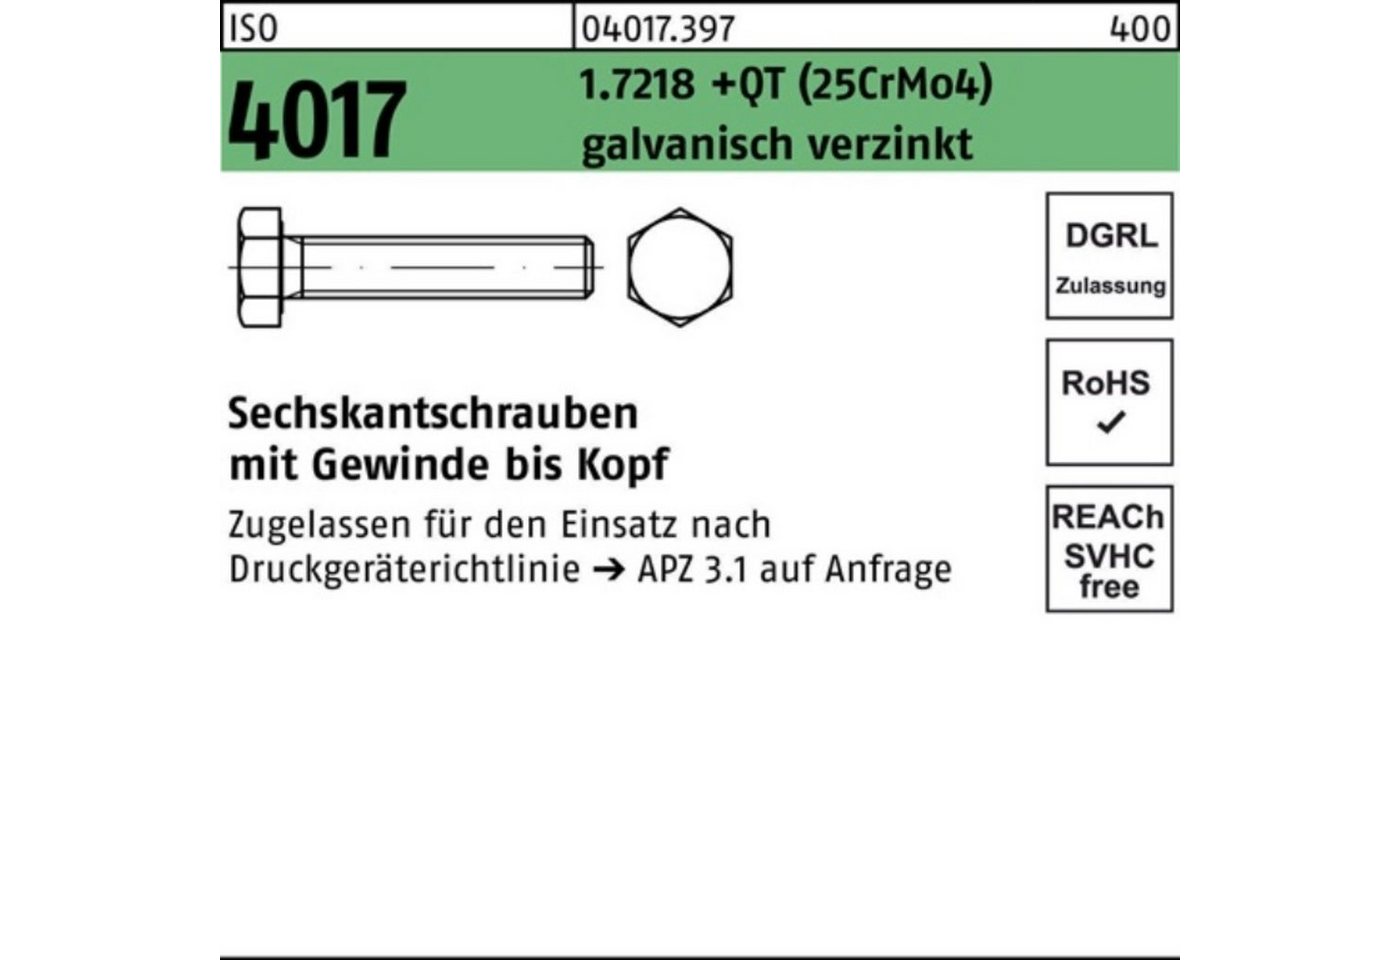 Bufab Sechskantschraube 100er Pack Sechskantschraube ISO 4017 VG M20x150 1.7218 +QT (25CrMo4) von Bufab